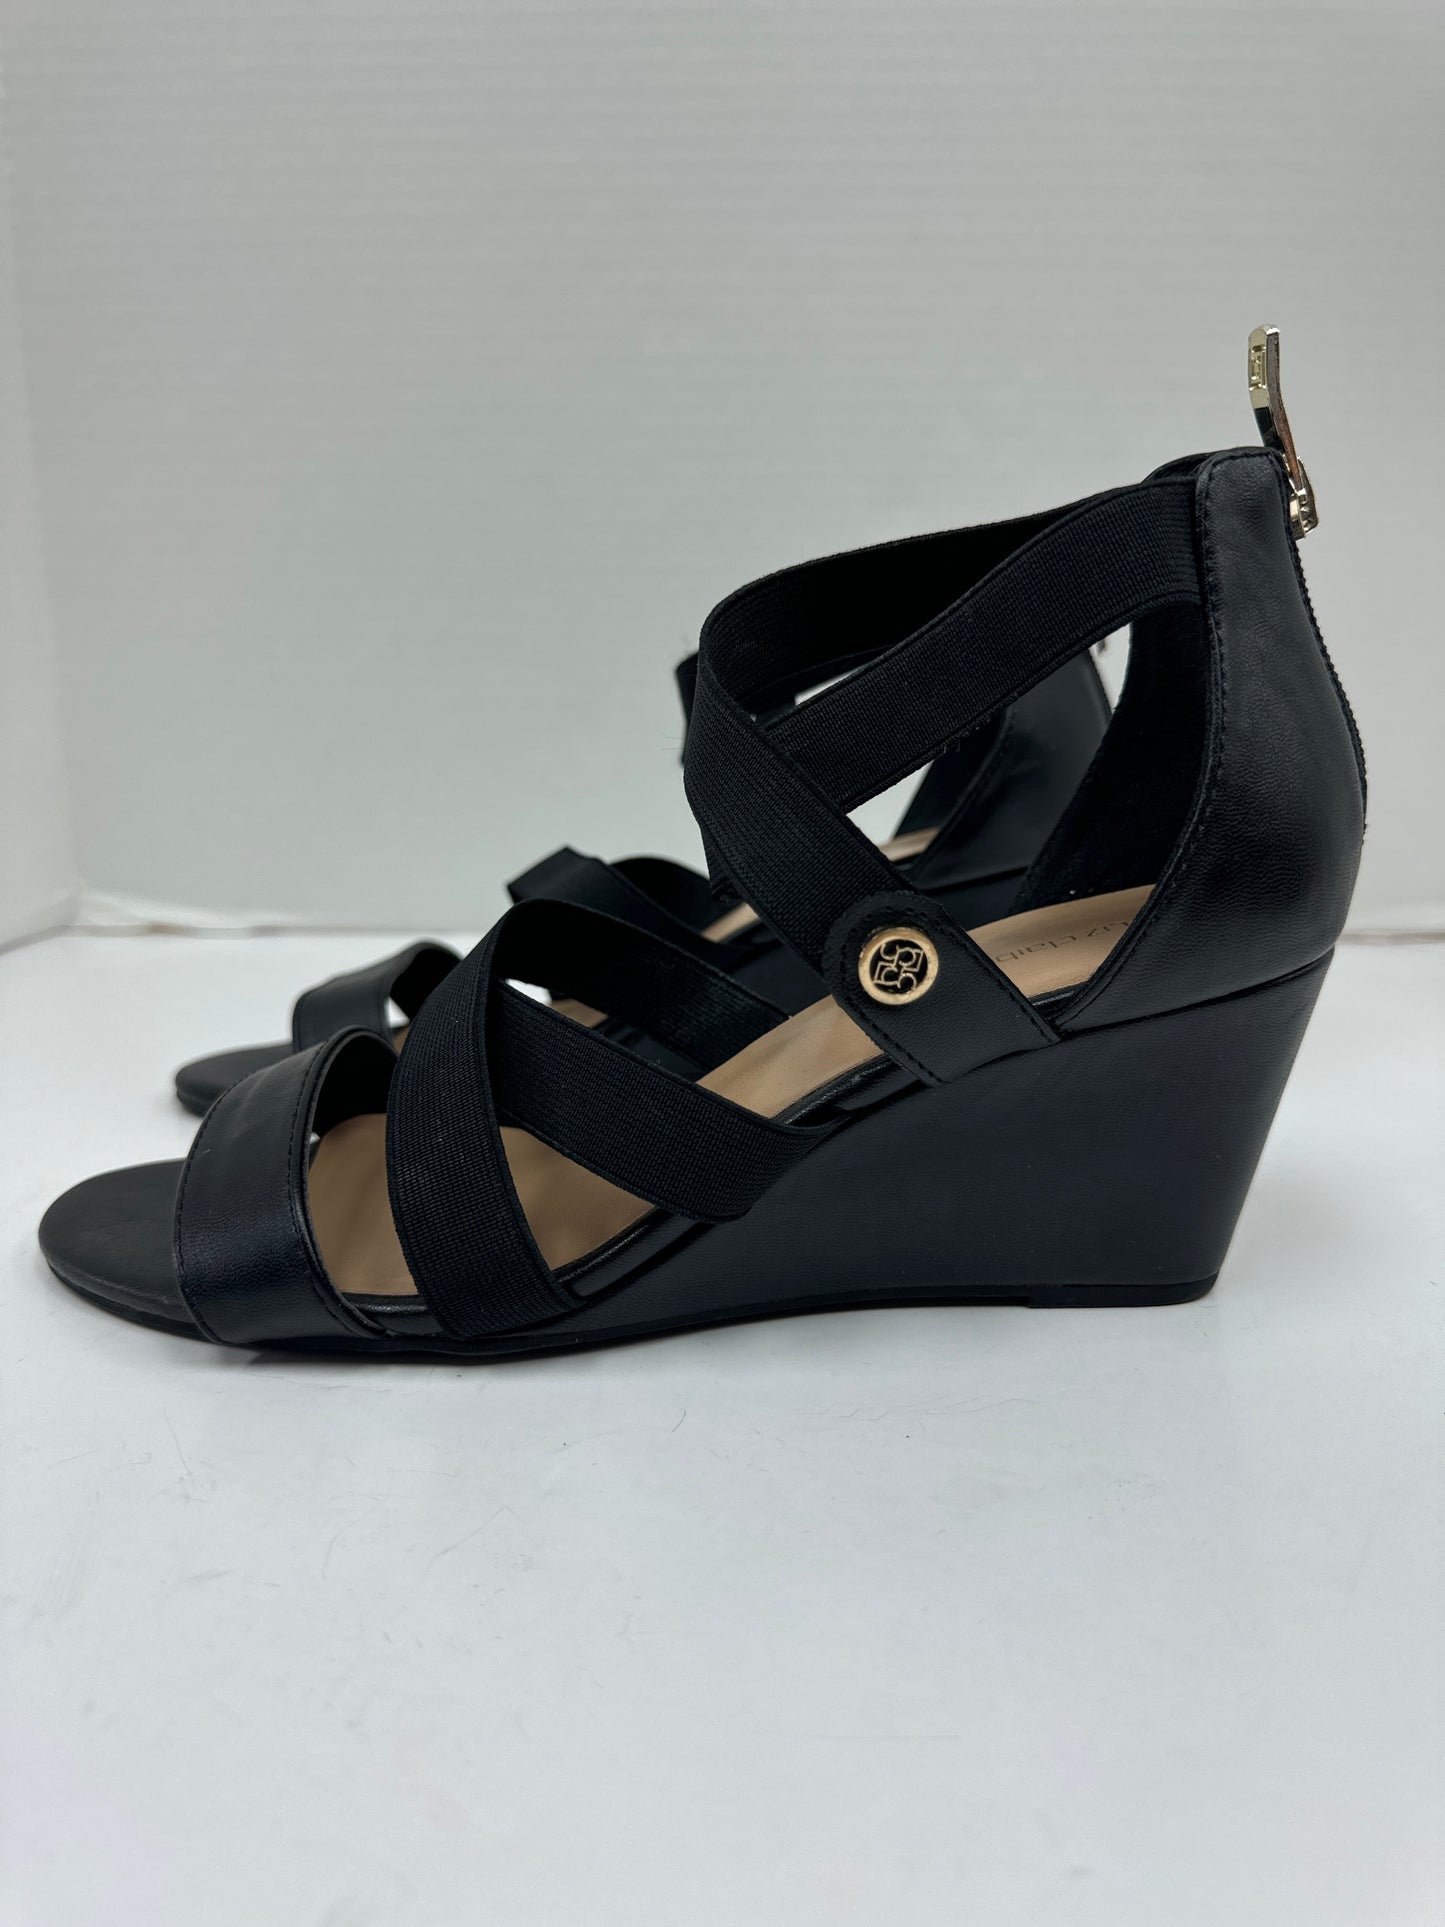 Black Sandals Heels Block Liz Claiborne, Size 8